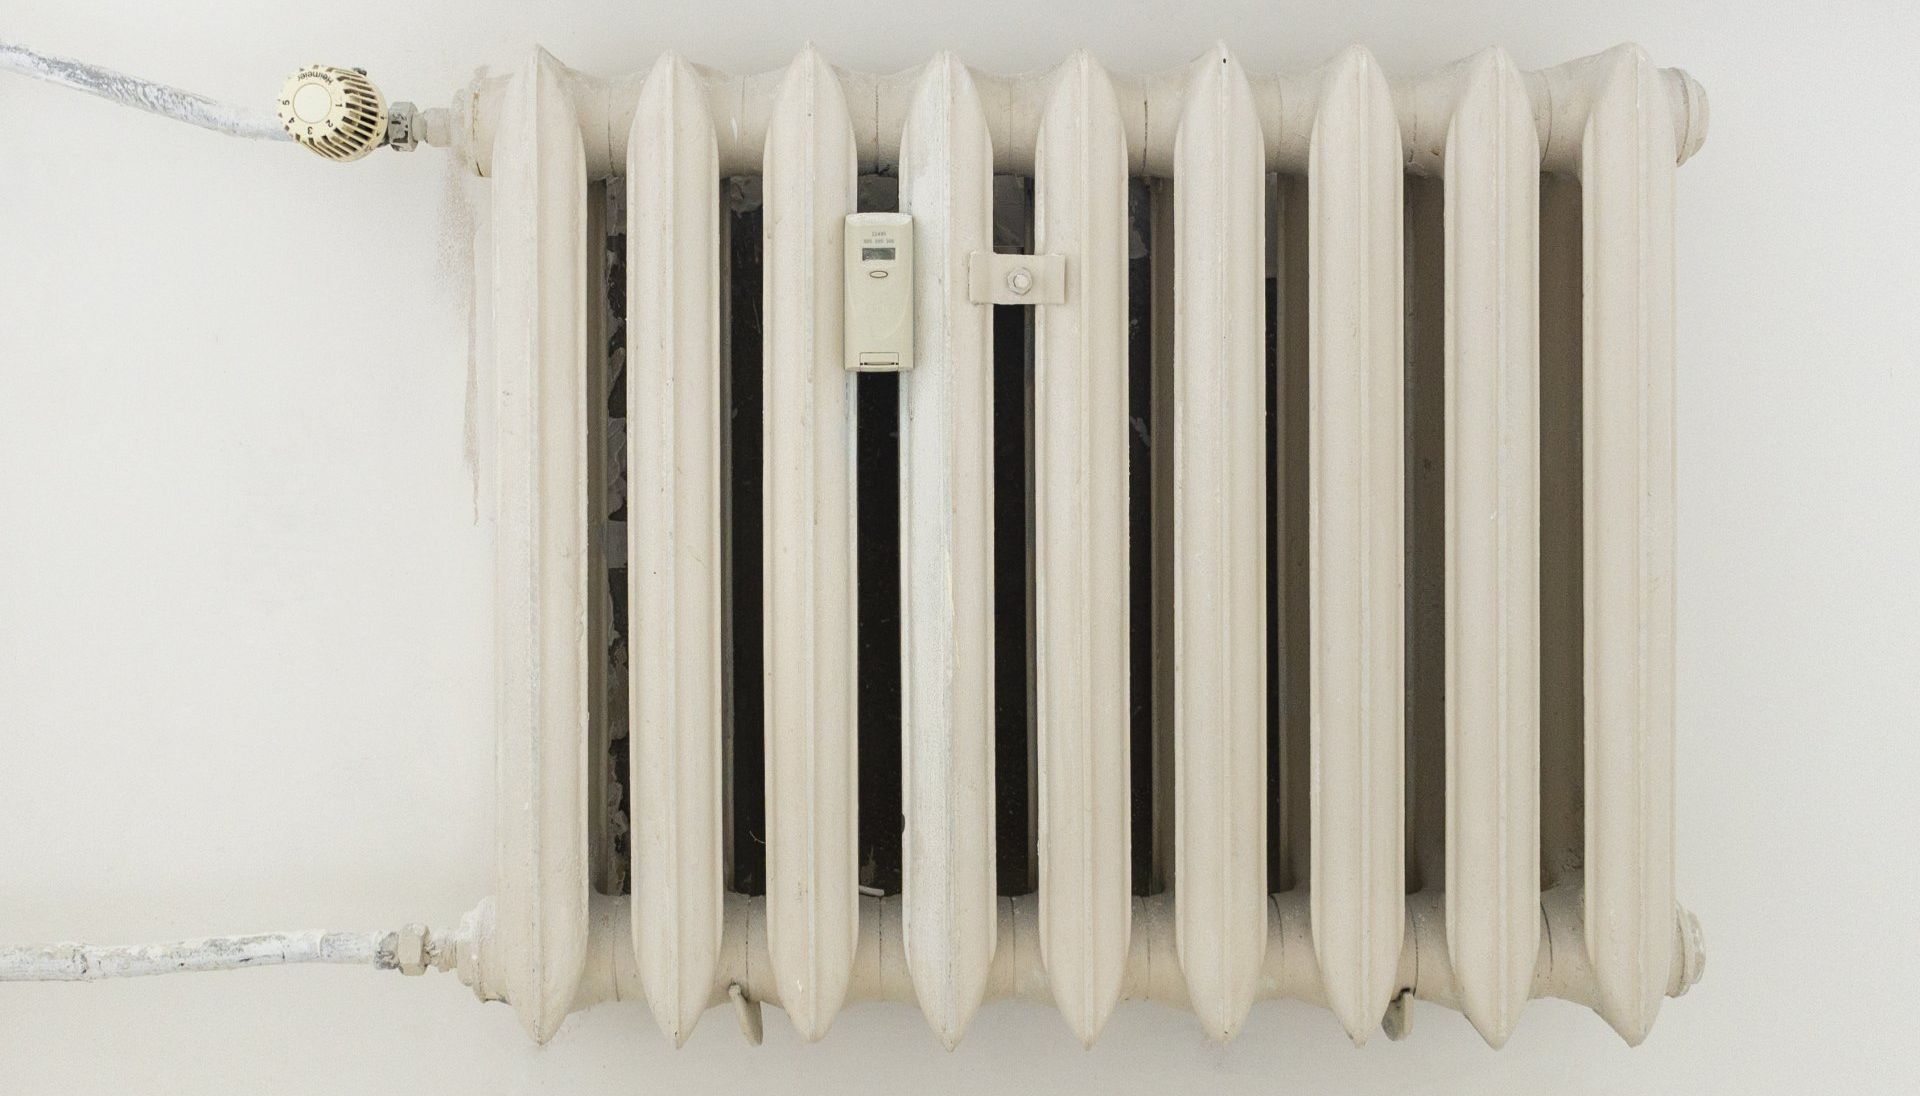 radiator heater